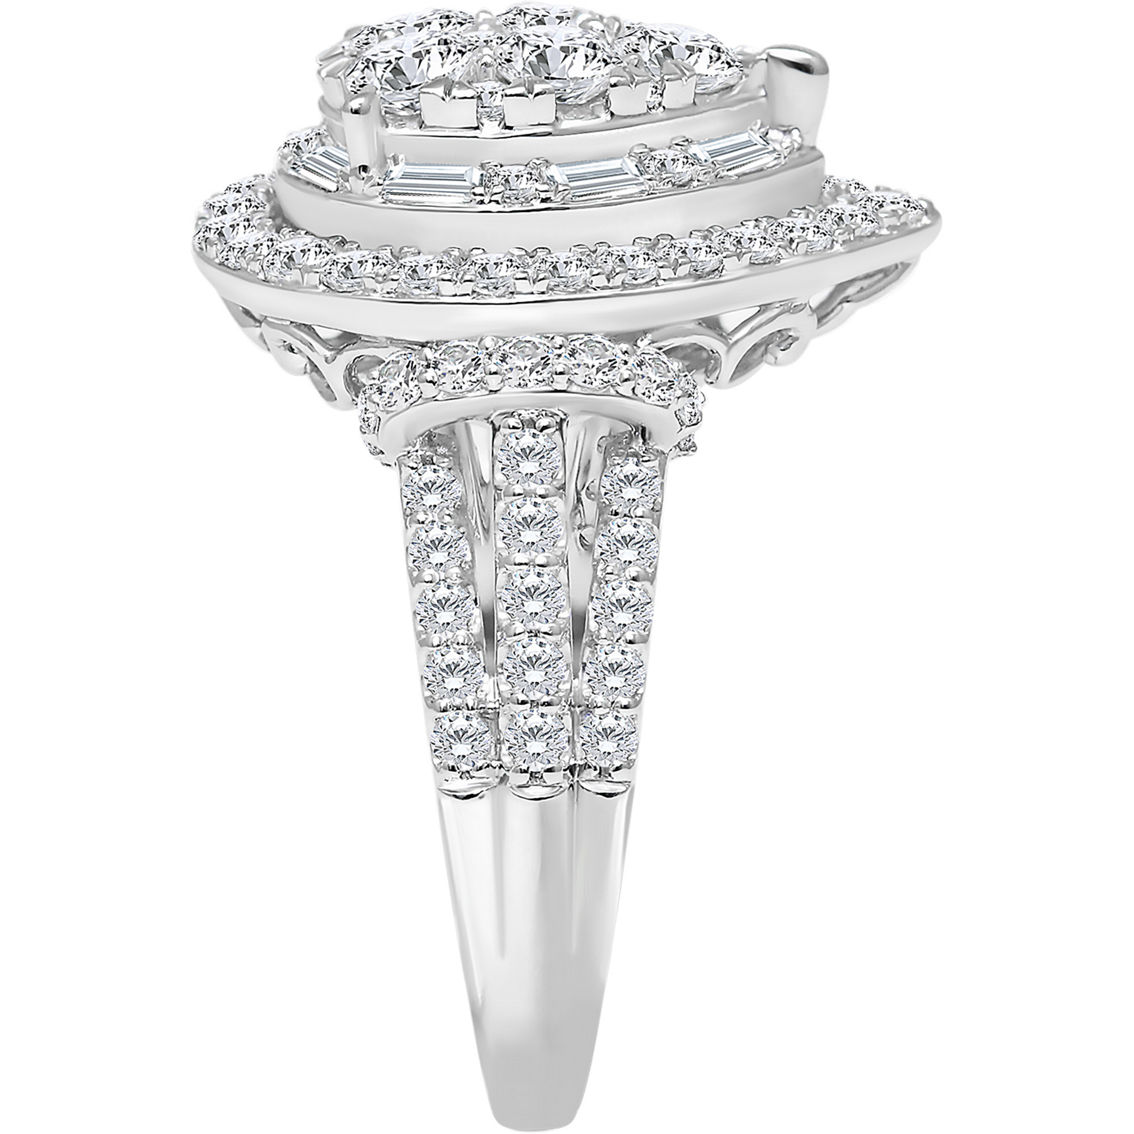 American Rose 10K White Gold 2 CTW Diamond Ring Size 7 - Image 3 of 4